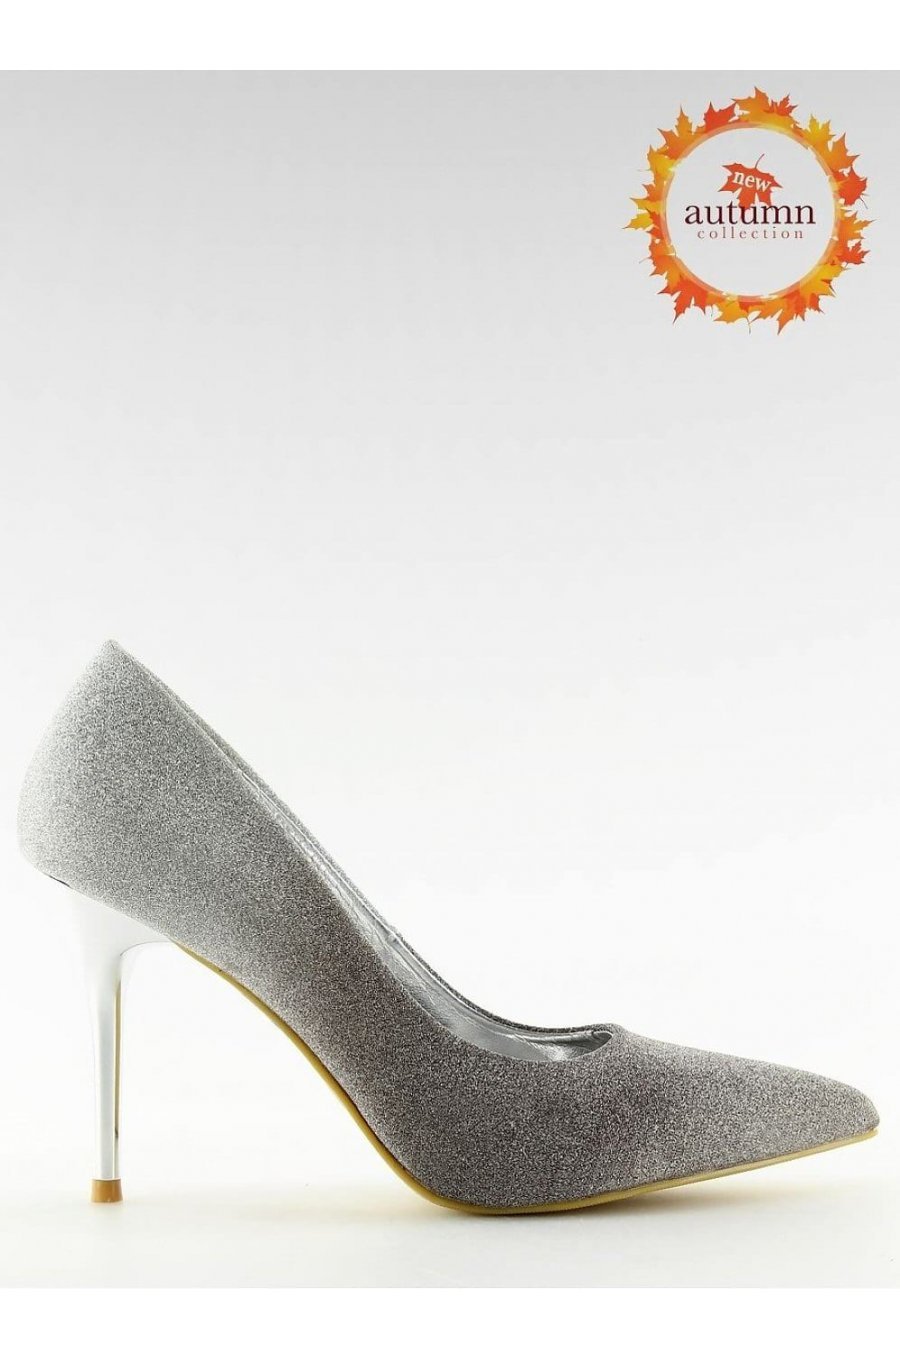 Pantofi eleganti argintii cu toc subtire Miruna 1 - jojofashion.ro